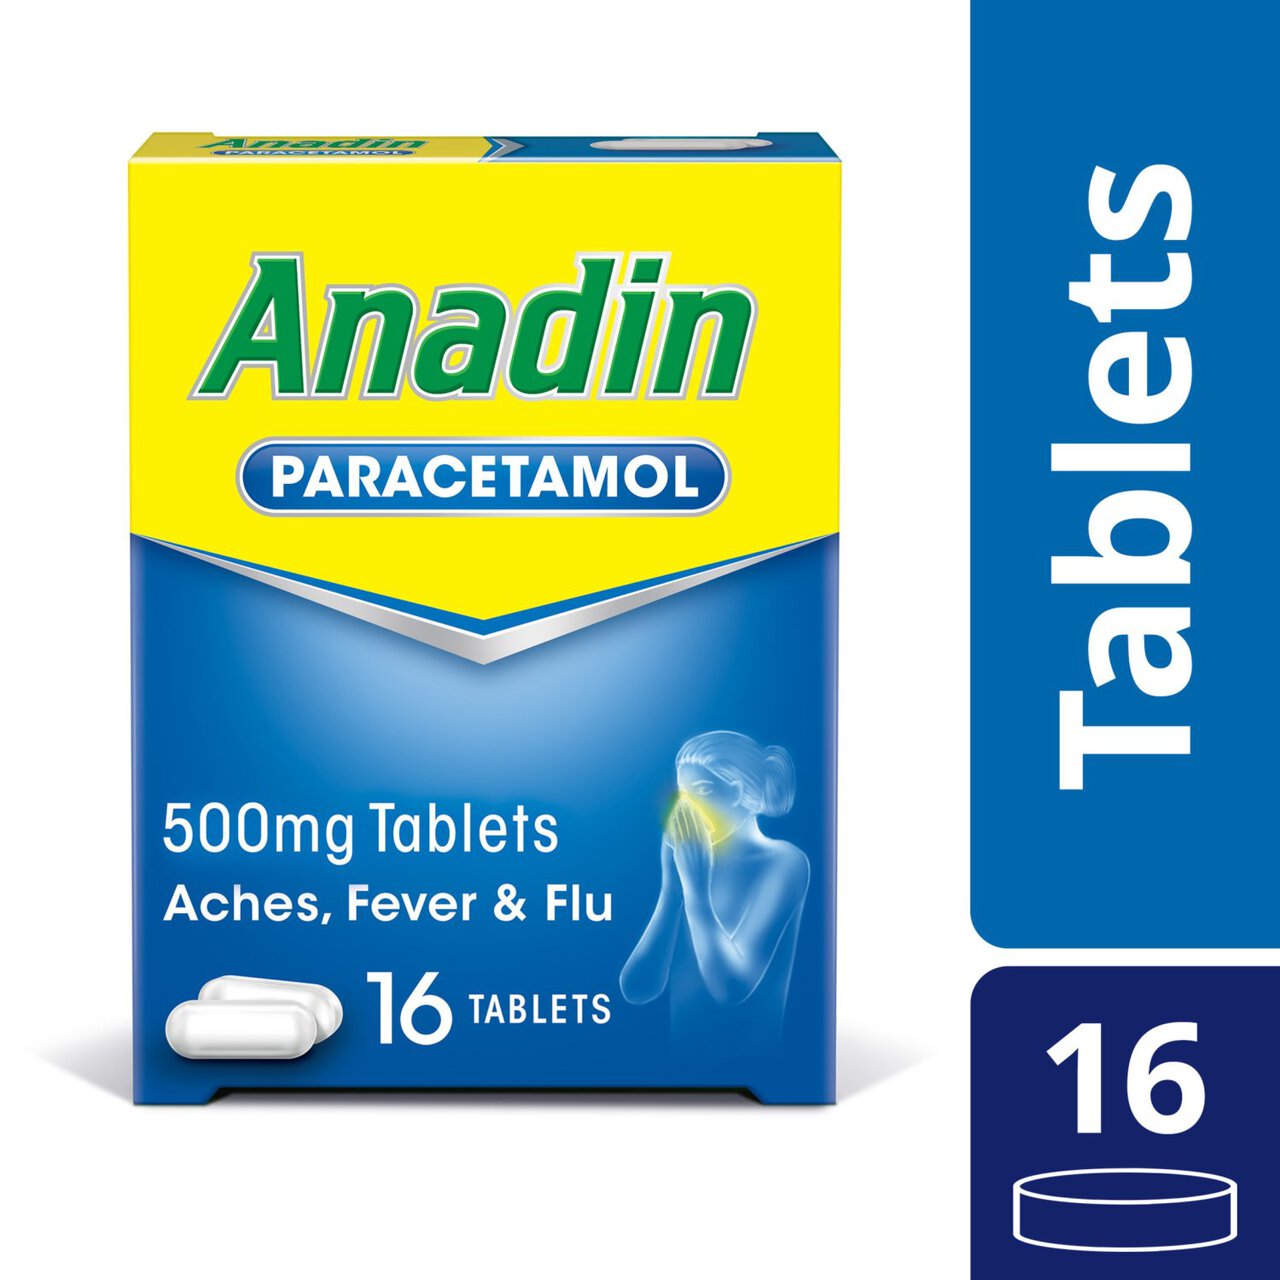 Anadin Paracetamol 500mg Tablets 16 per pack